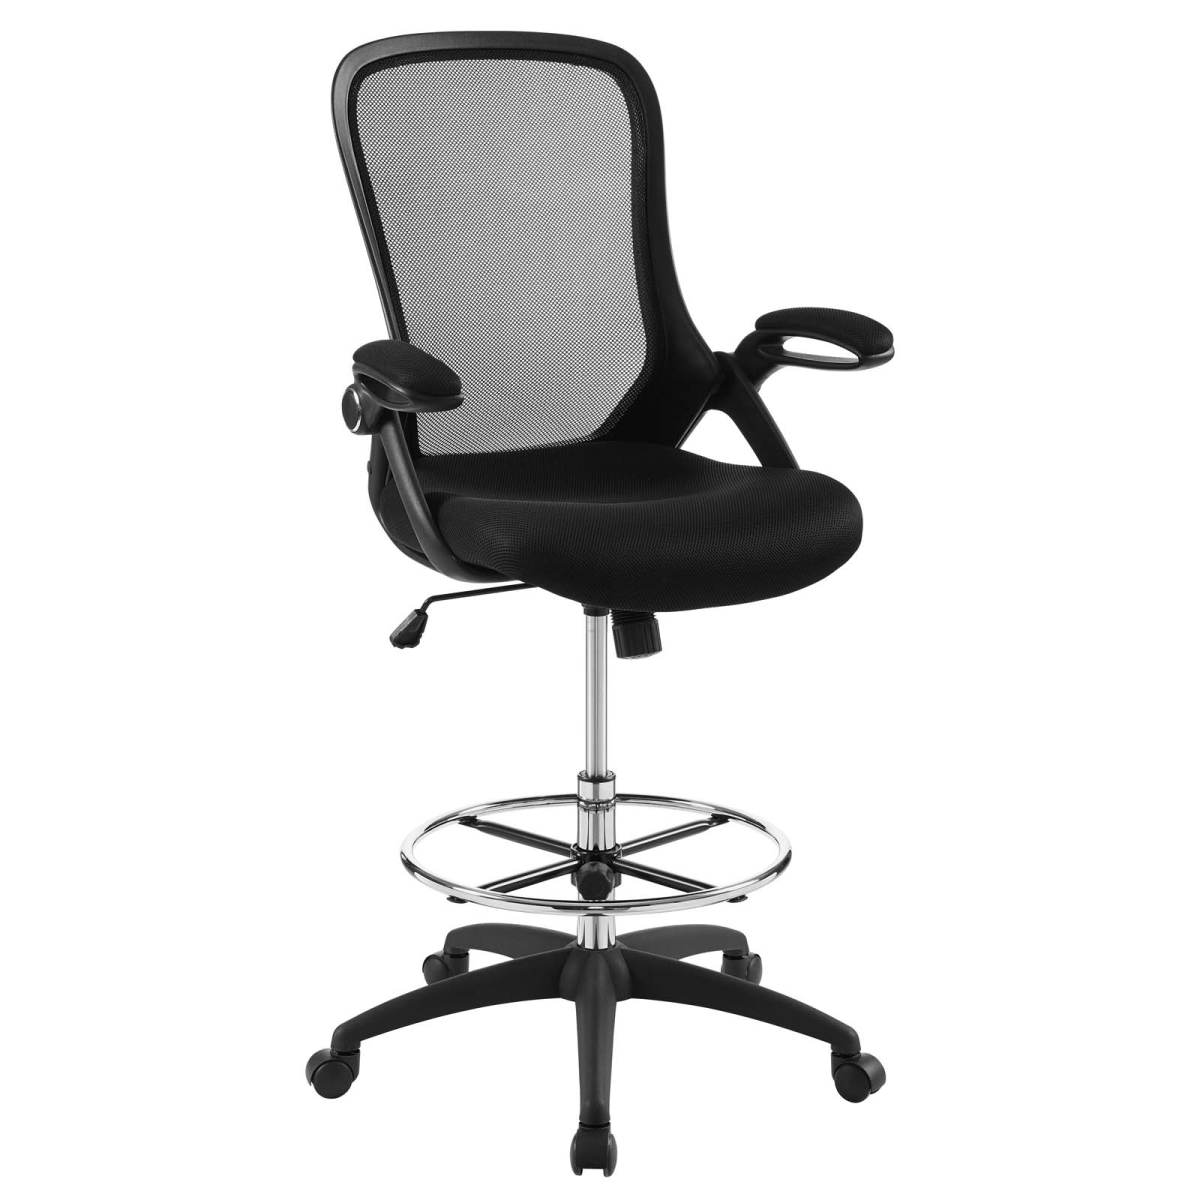 Eei-3190-blk Assert Mesh Drafting Chair - Black, 52 X 26.5 X 27 In.